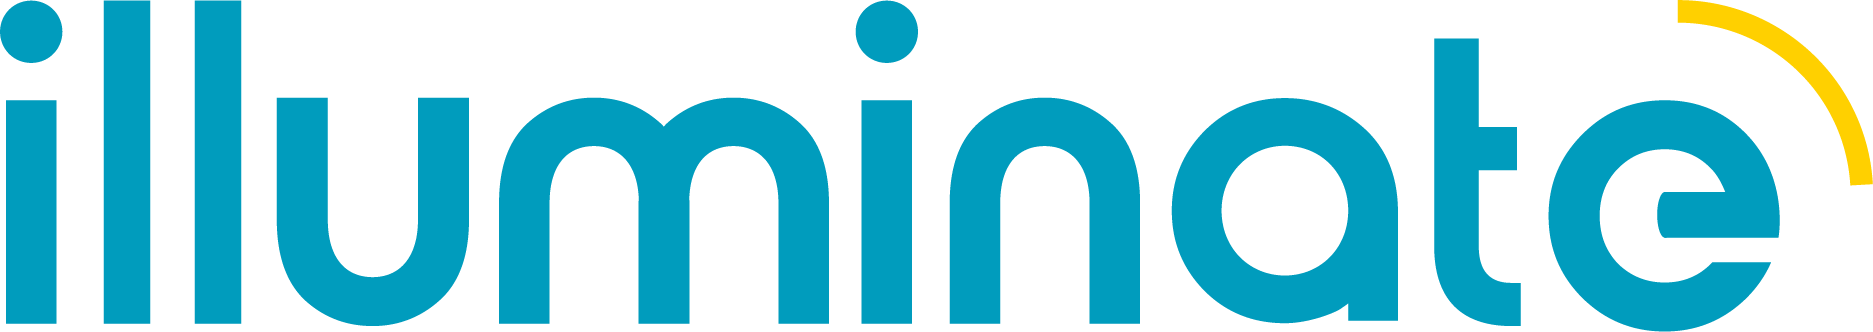 Illuminate Logo Blue